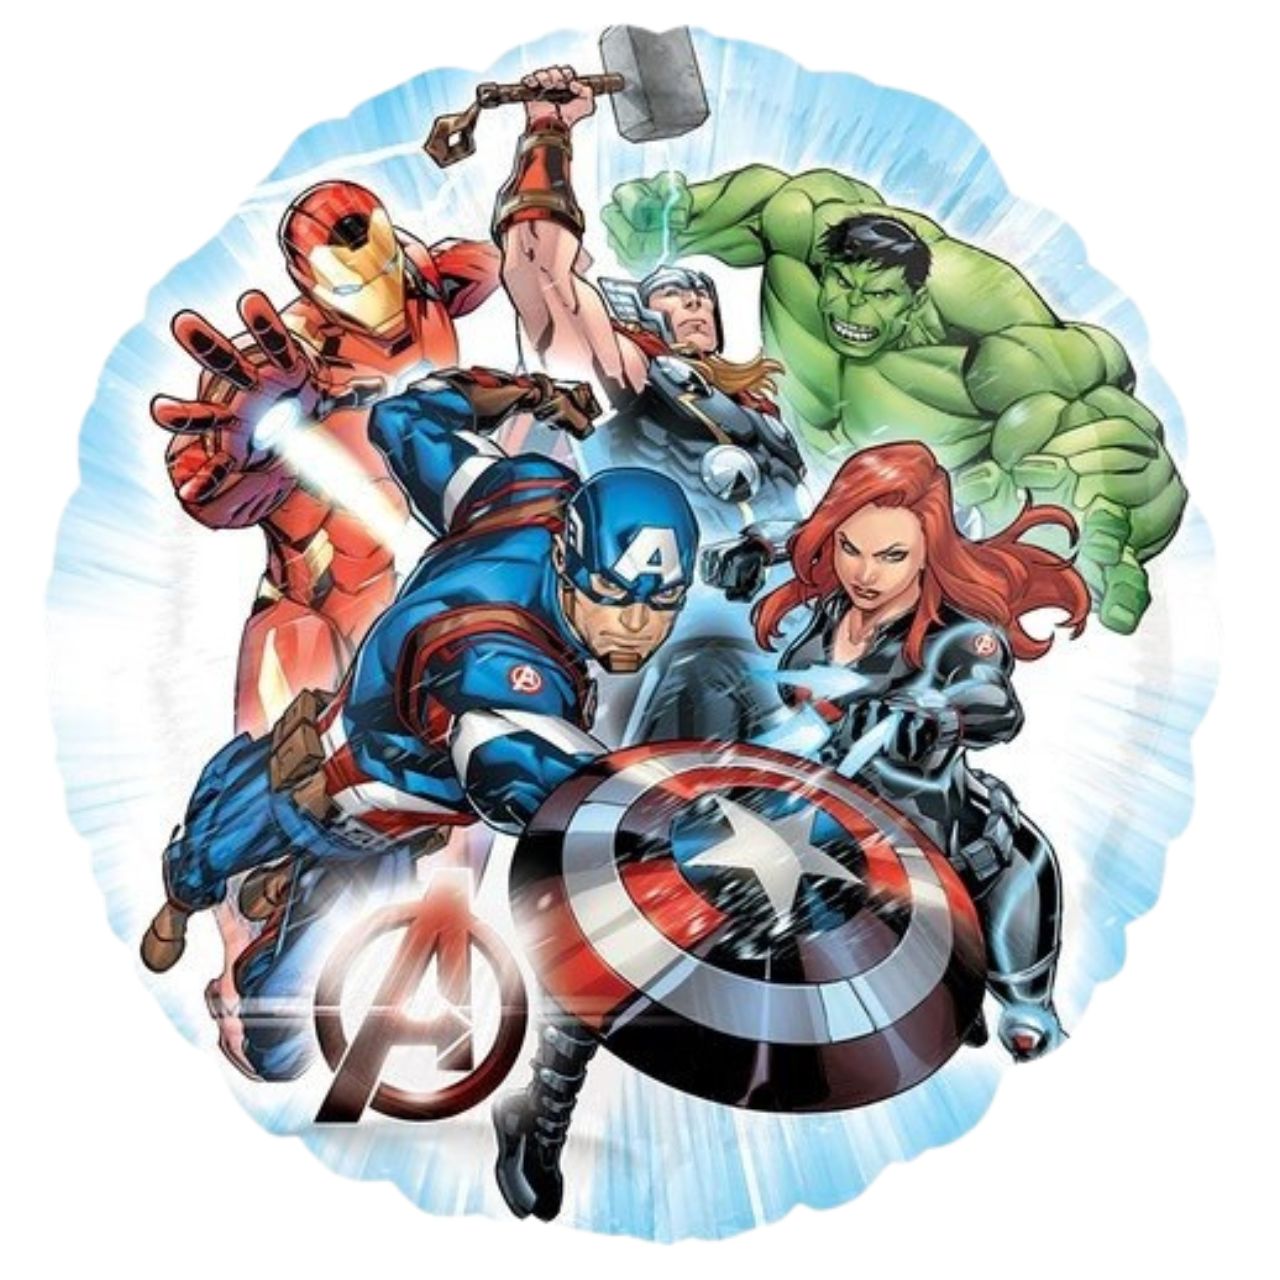 Anagram Avengers Foil Round Balloon with Avenger Figures